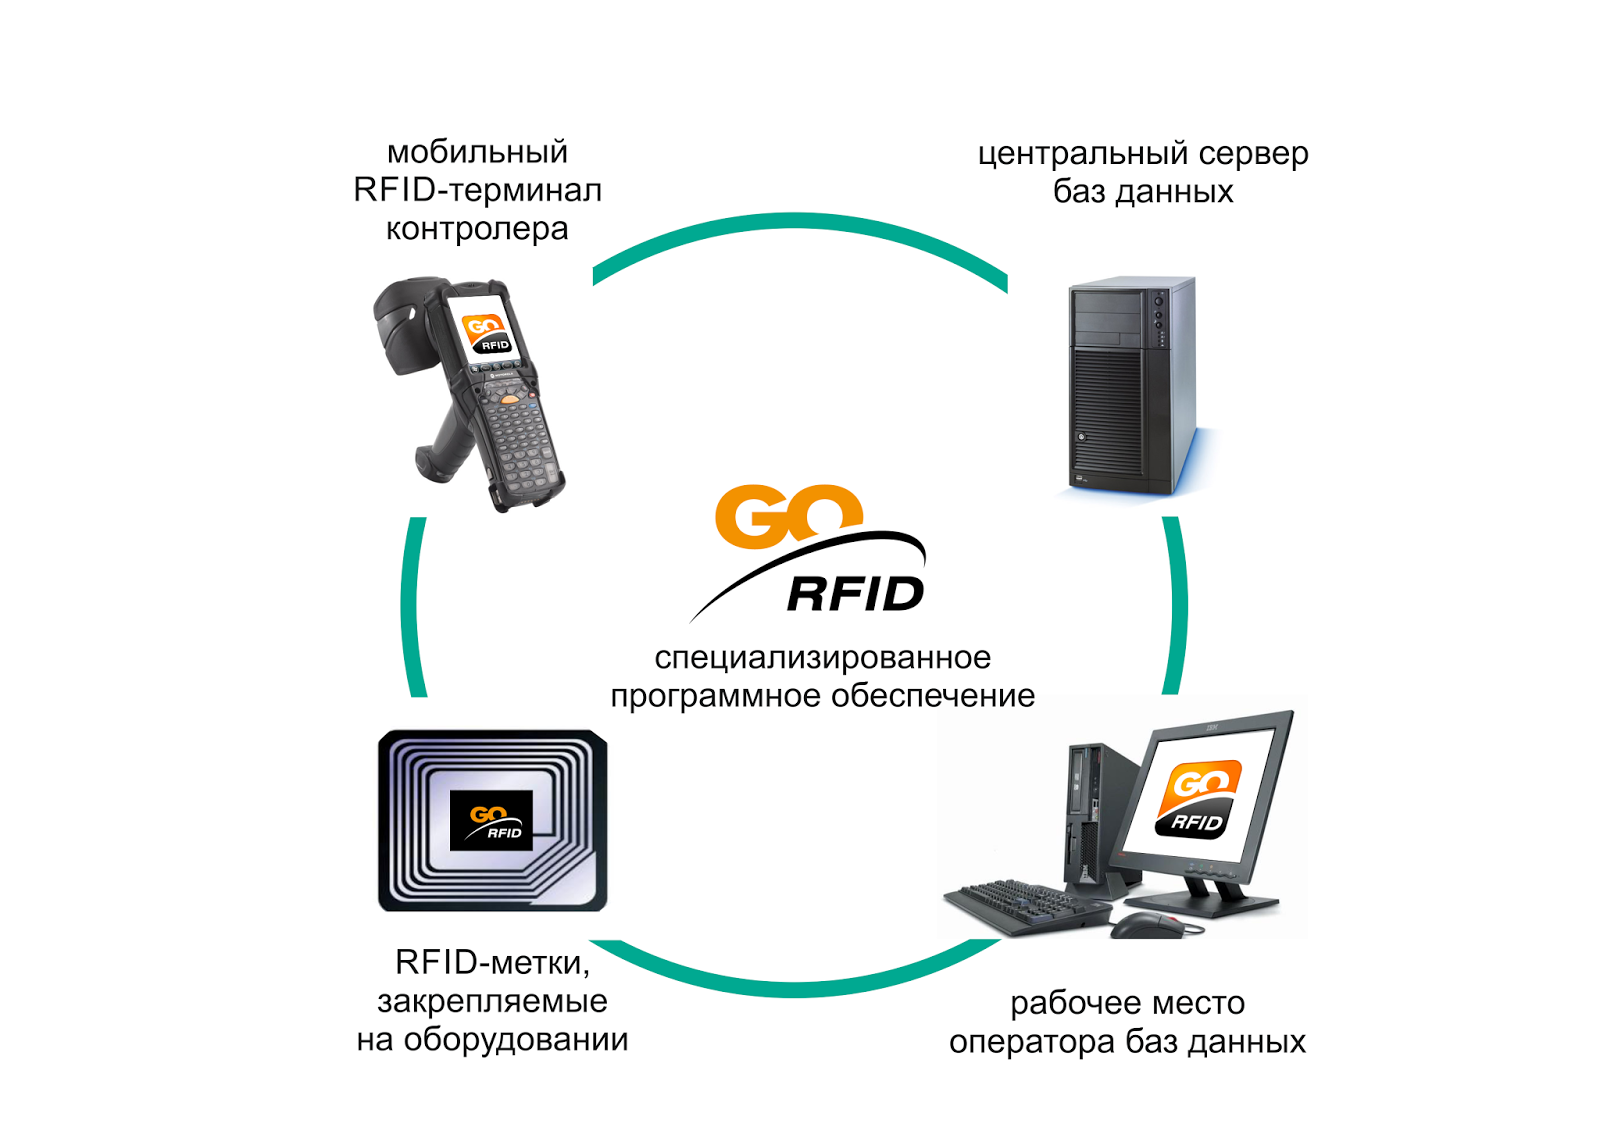 Технология меток. Технология радиочастотной идентификации RFID. Схема работы RFID системы. Система считывания RFID меток. Структура RFID метки.